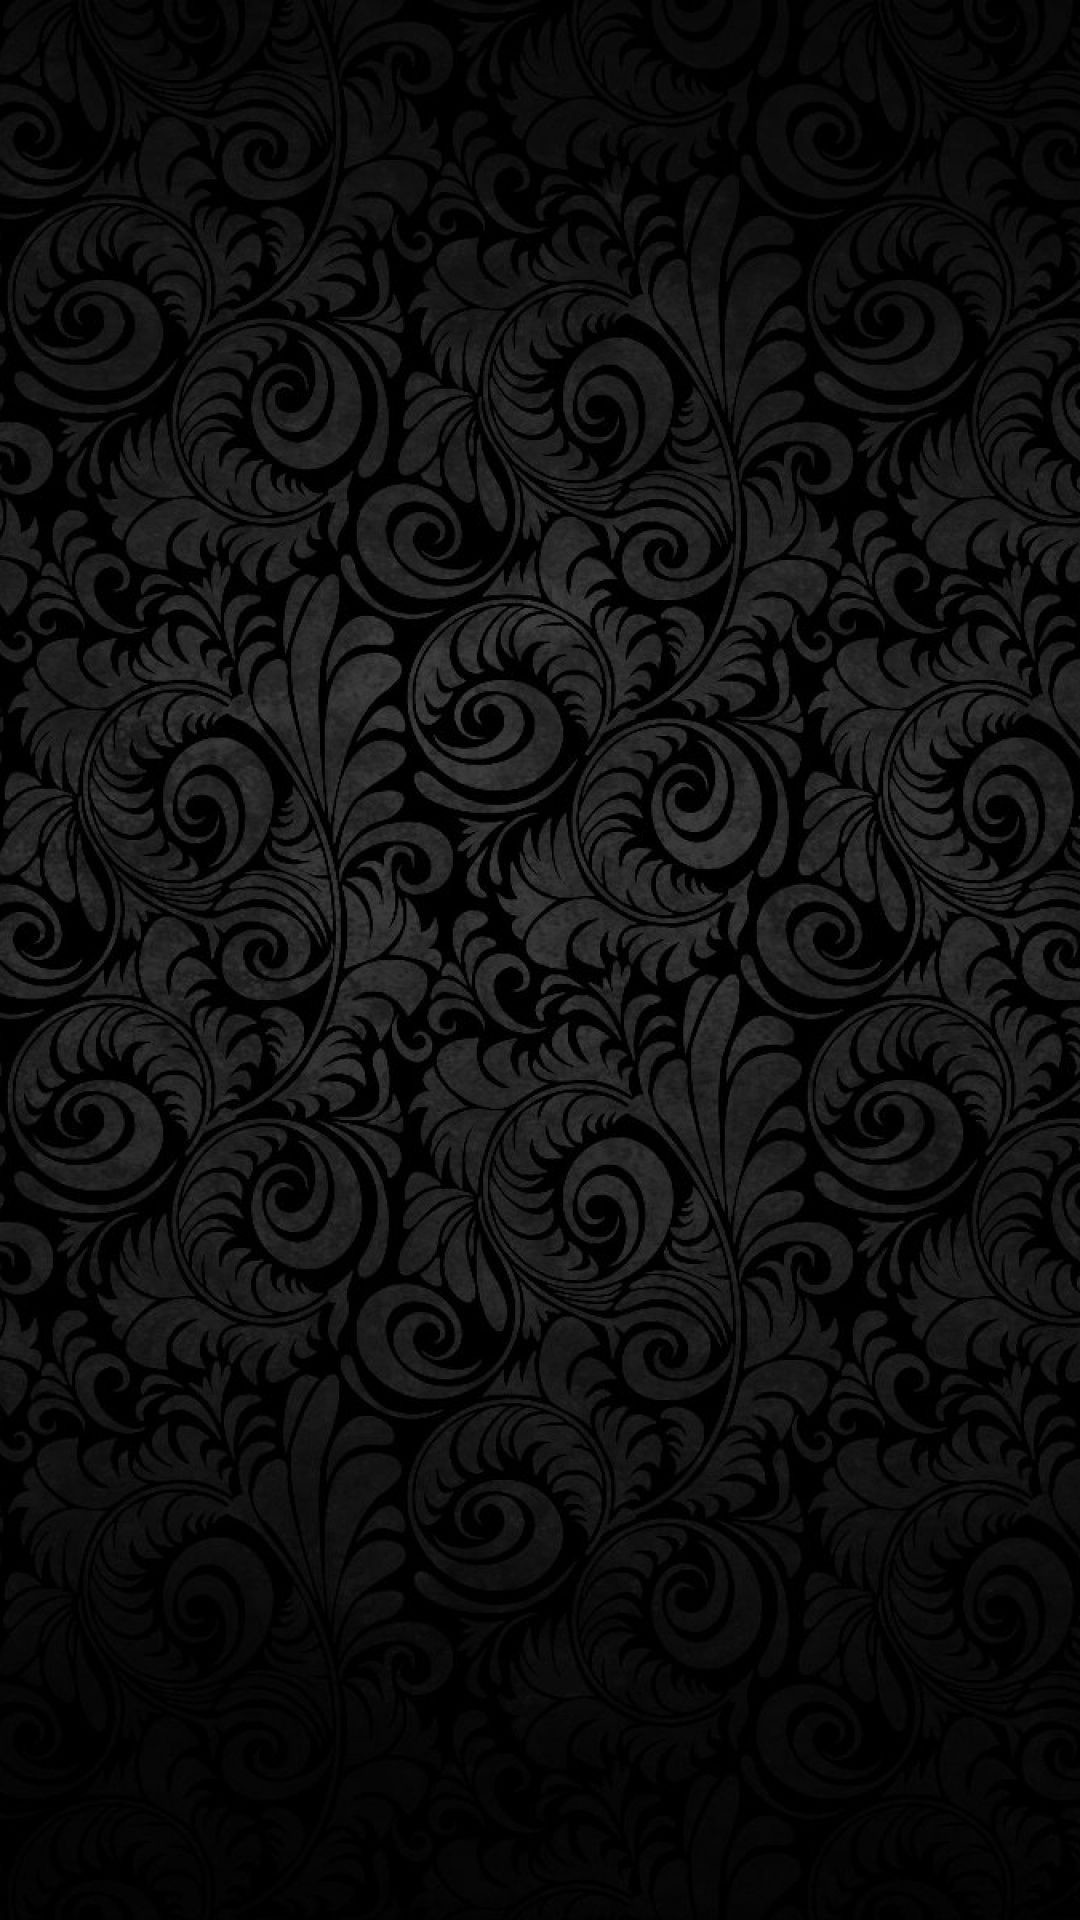 1080x1920, Iphone 6 Plus Wallpaper Dark Pattern 07 - Iphone 6 Wallpaper  Black - 1080x1920 Wallpaper 